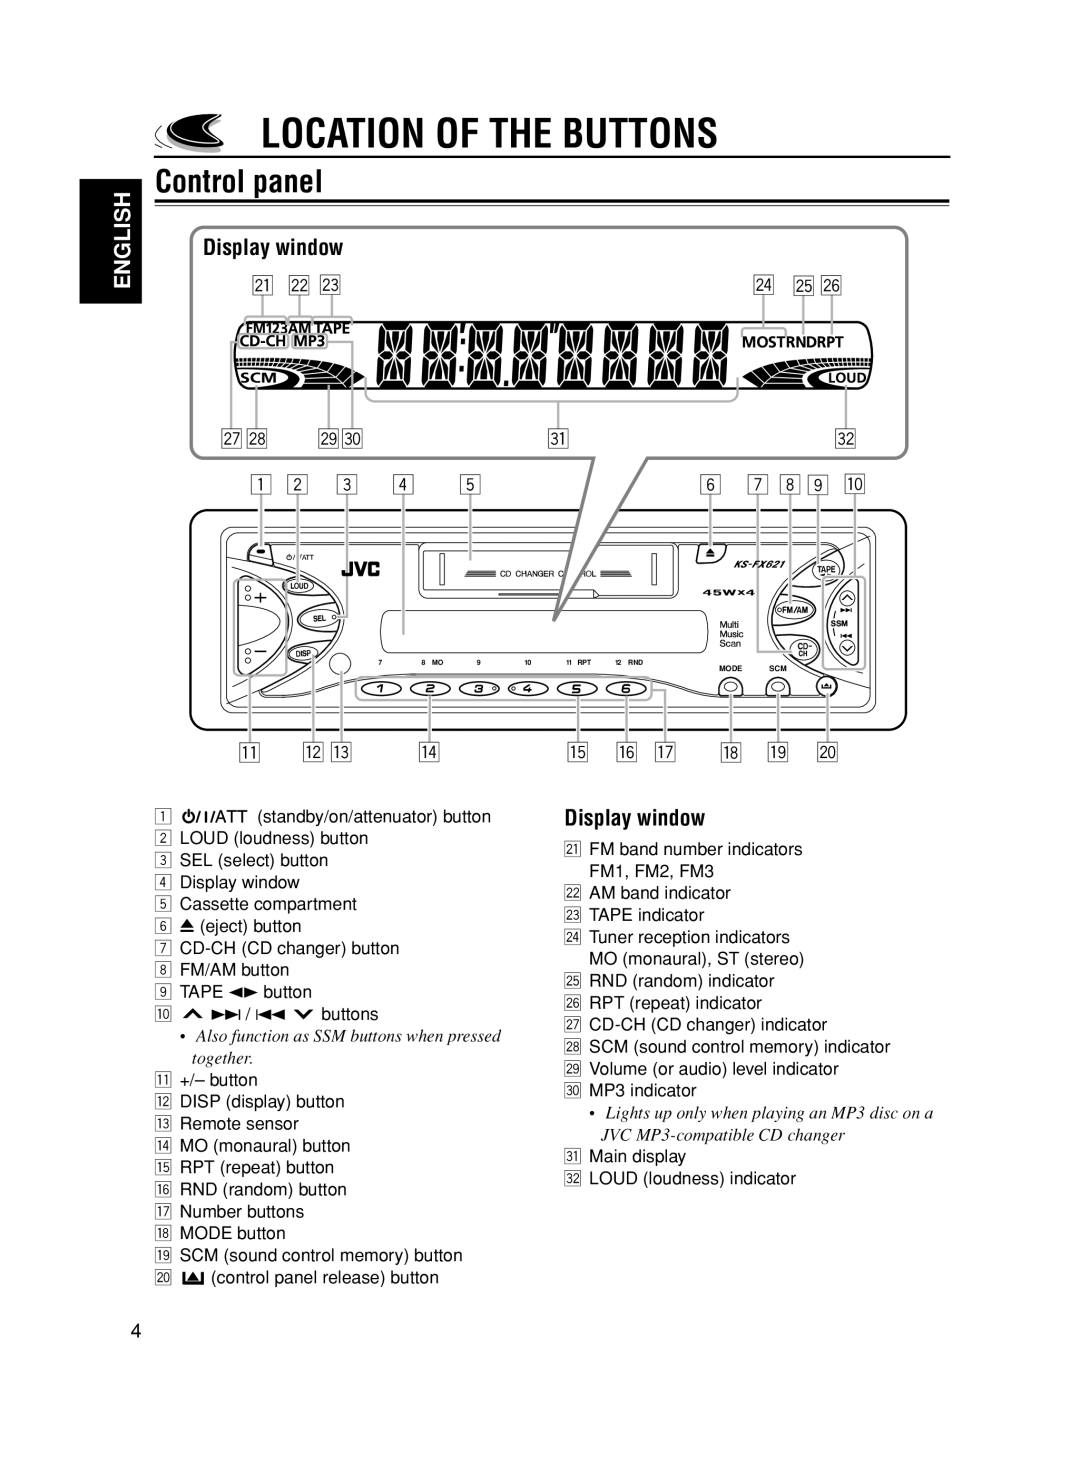 JVC CDA-5755, GET0113-001A, KS-FX621, CH-X series, CH-X100 manual Location of the Buttons, Control panel, Display window 